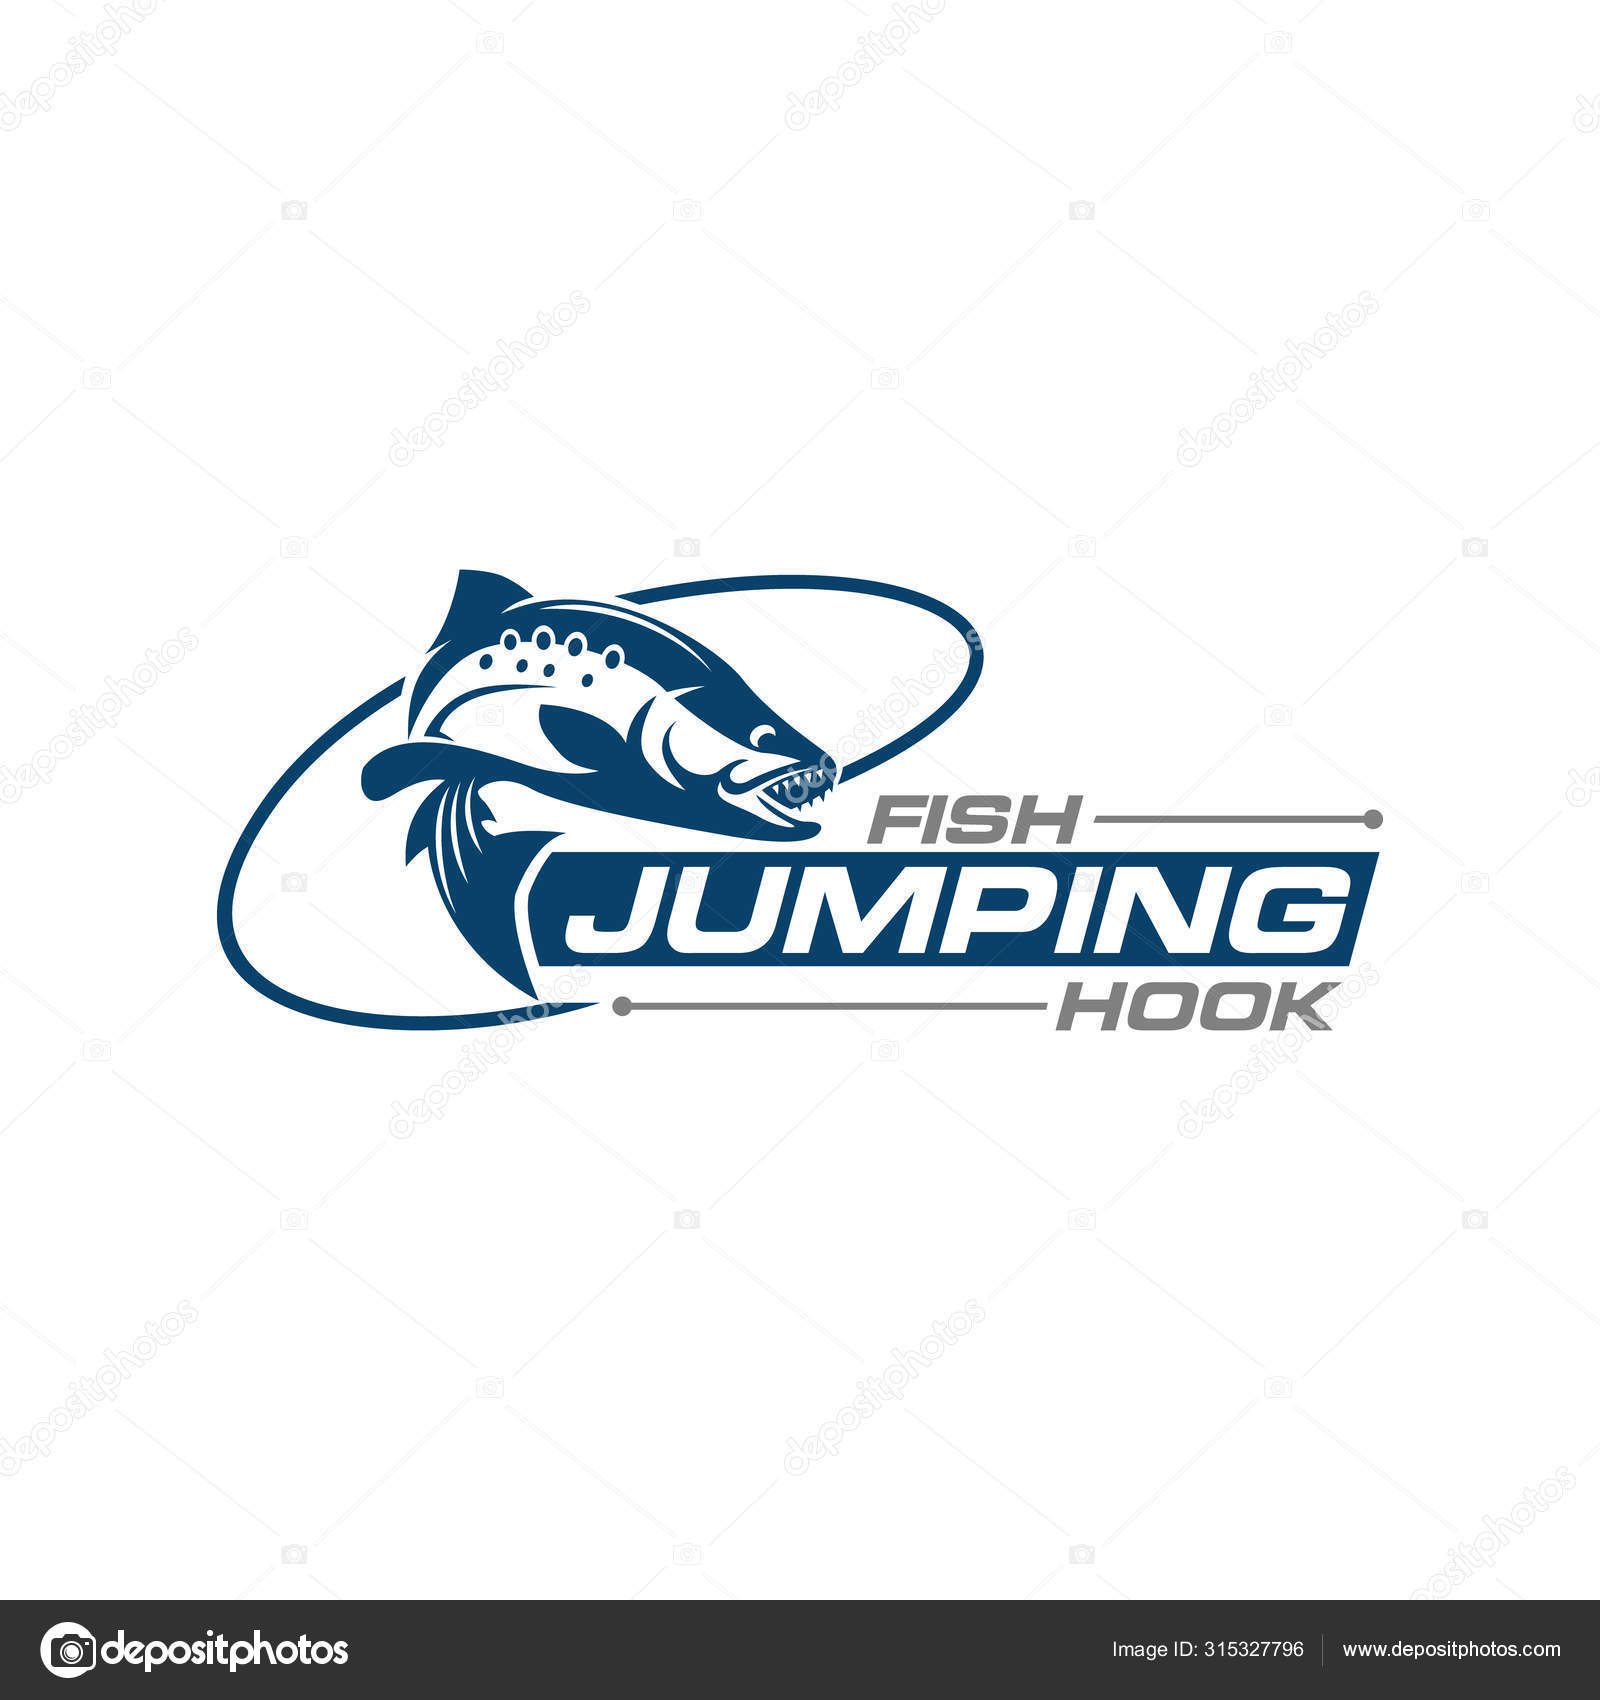 Fish Jumping Hook Fishing Team Club Logo Design Template Vector Stock Vector  by ©Eko07 315327796